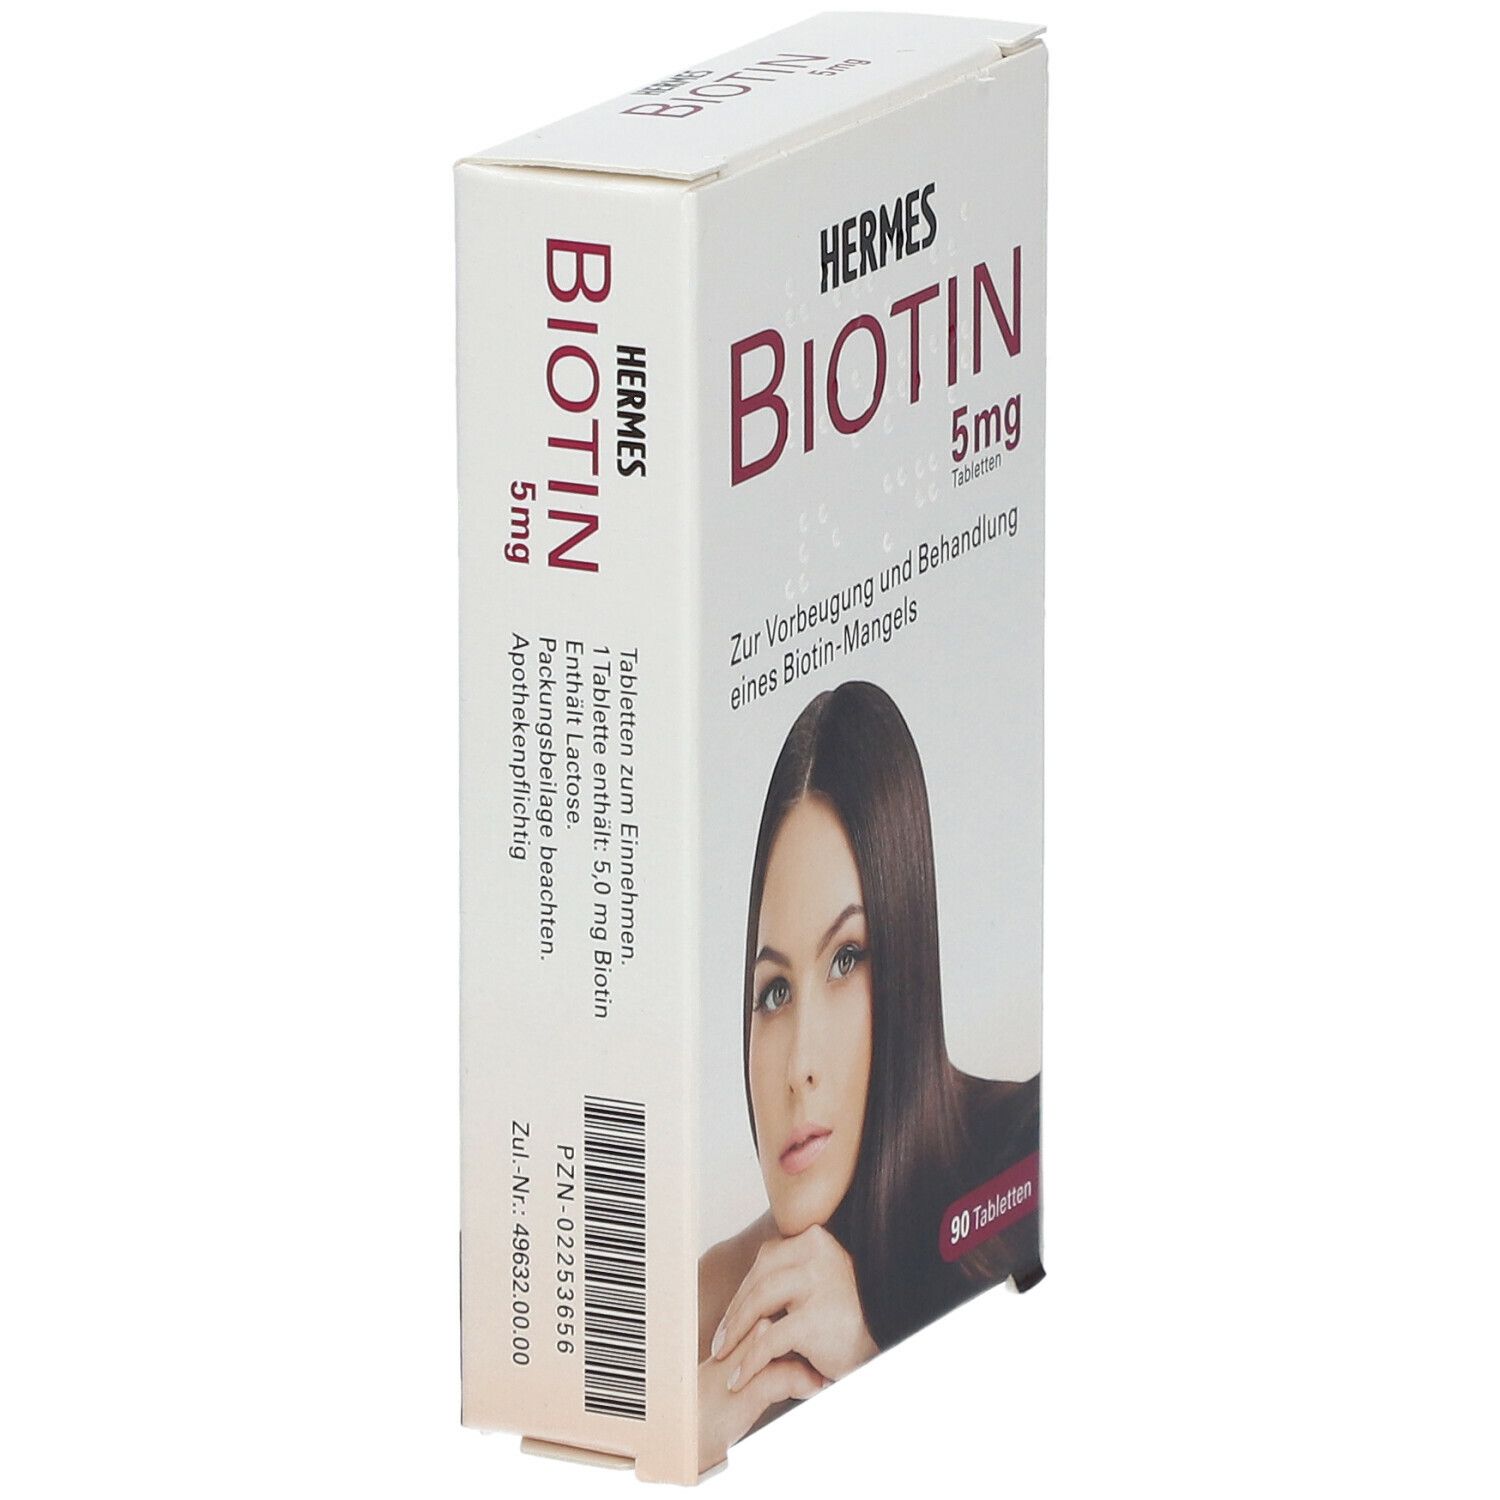 HERMES Biotin 5 mg